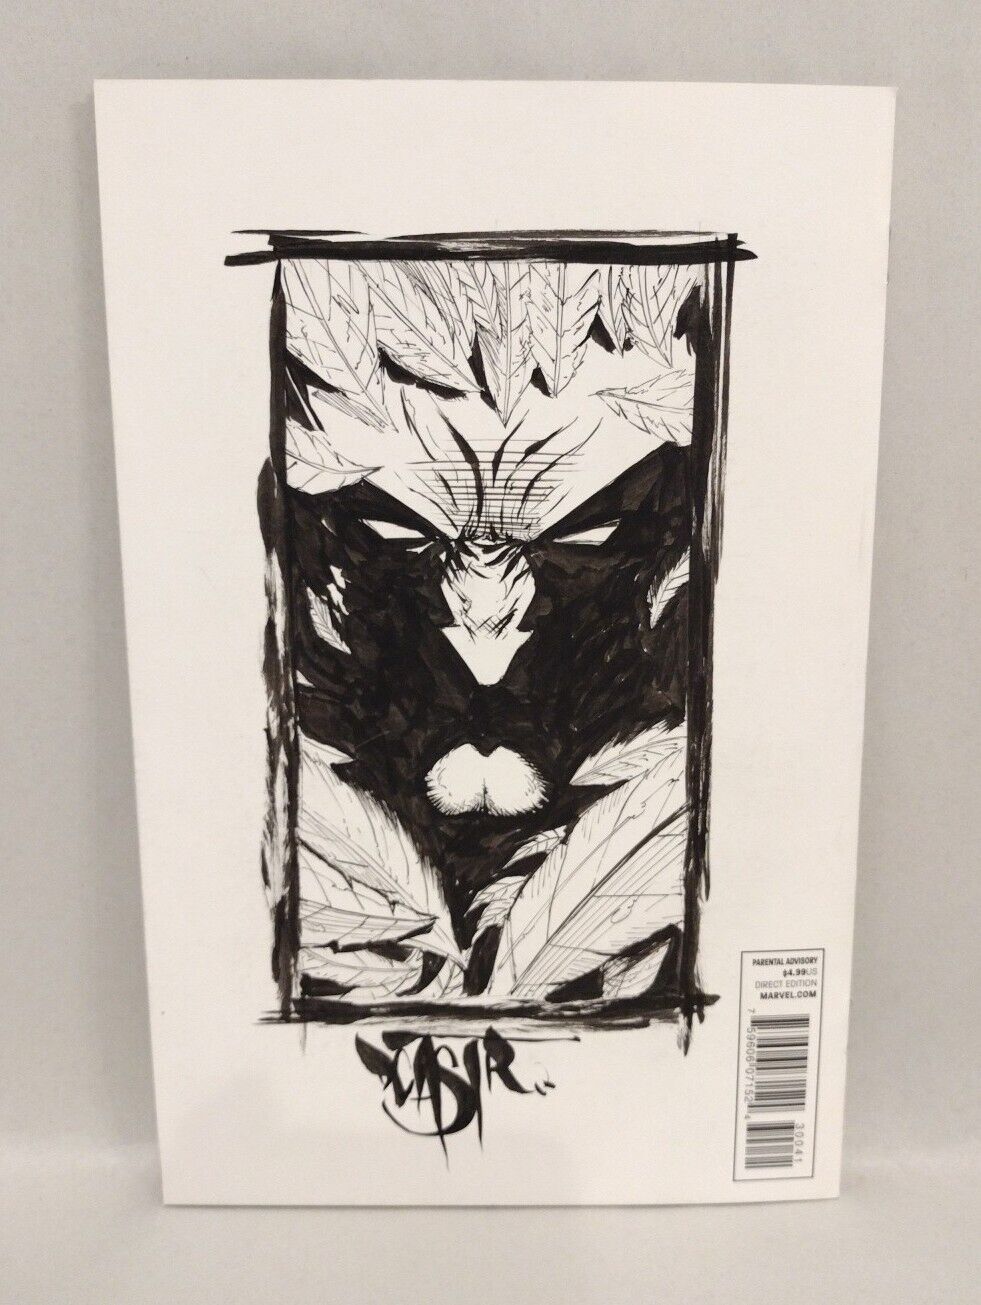 Wolverine 300 (2012) Marvel Blank Sketch Variant Comic w Original Dave Castr Art